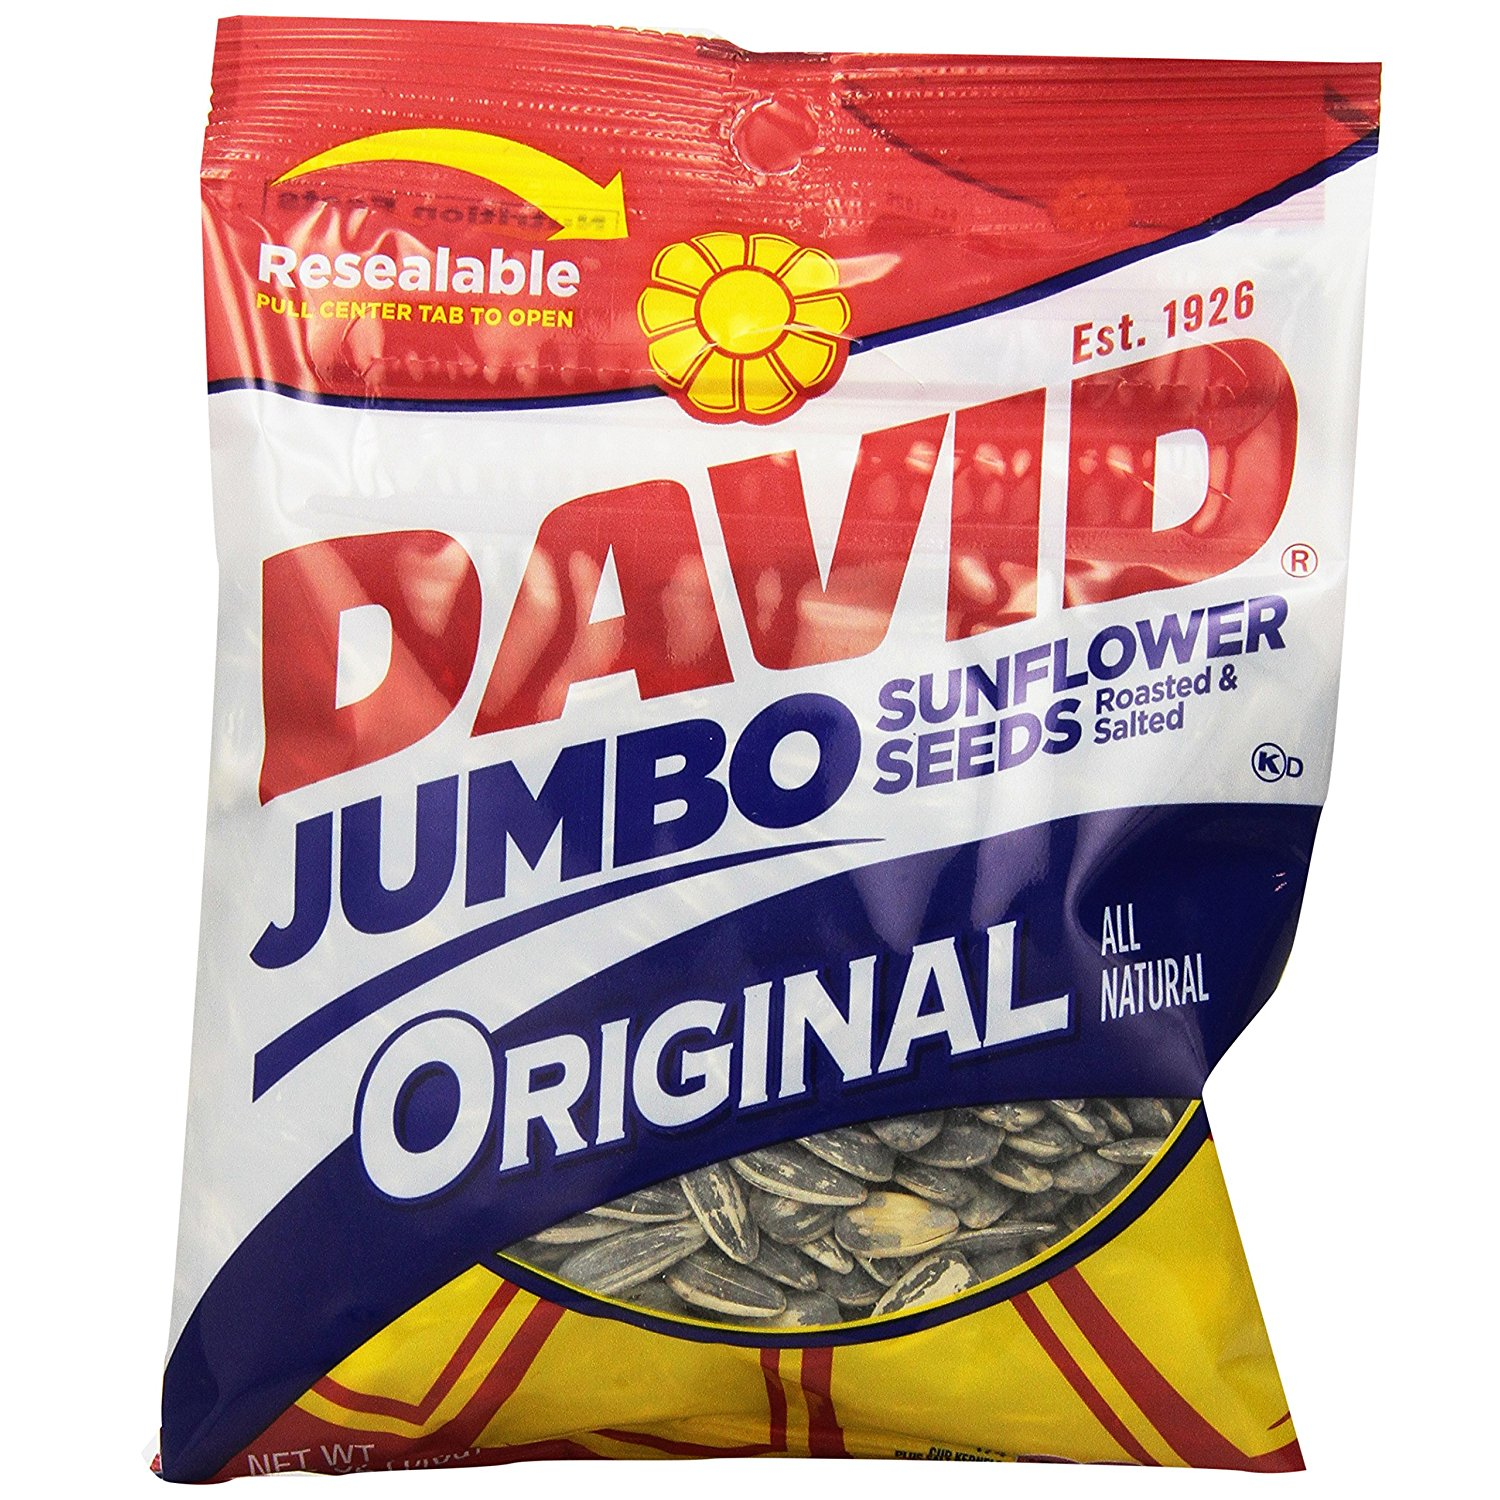 David Seeds Jumbo Sunflower Original Pack of 12 Only $9.96 Shipped!